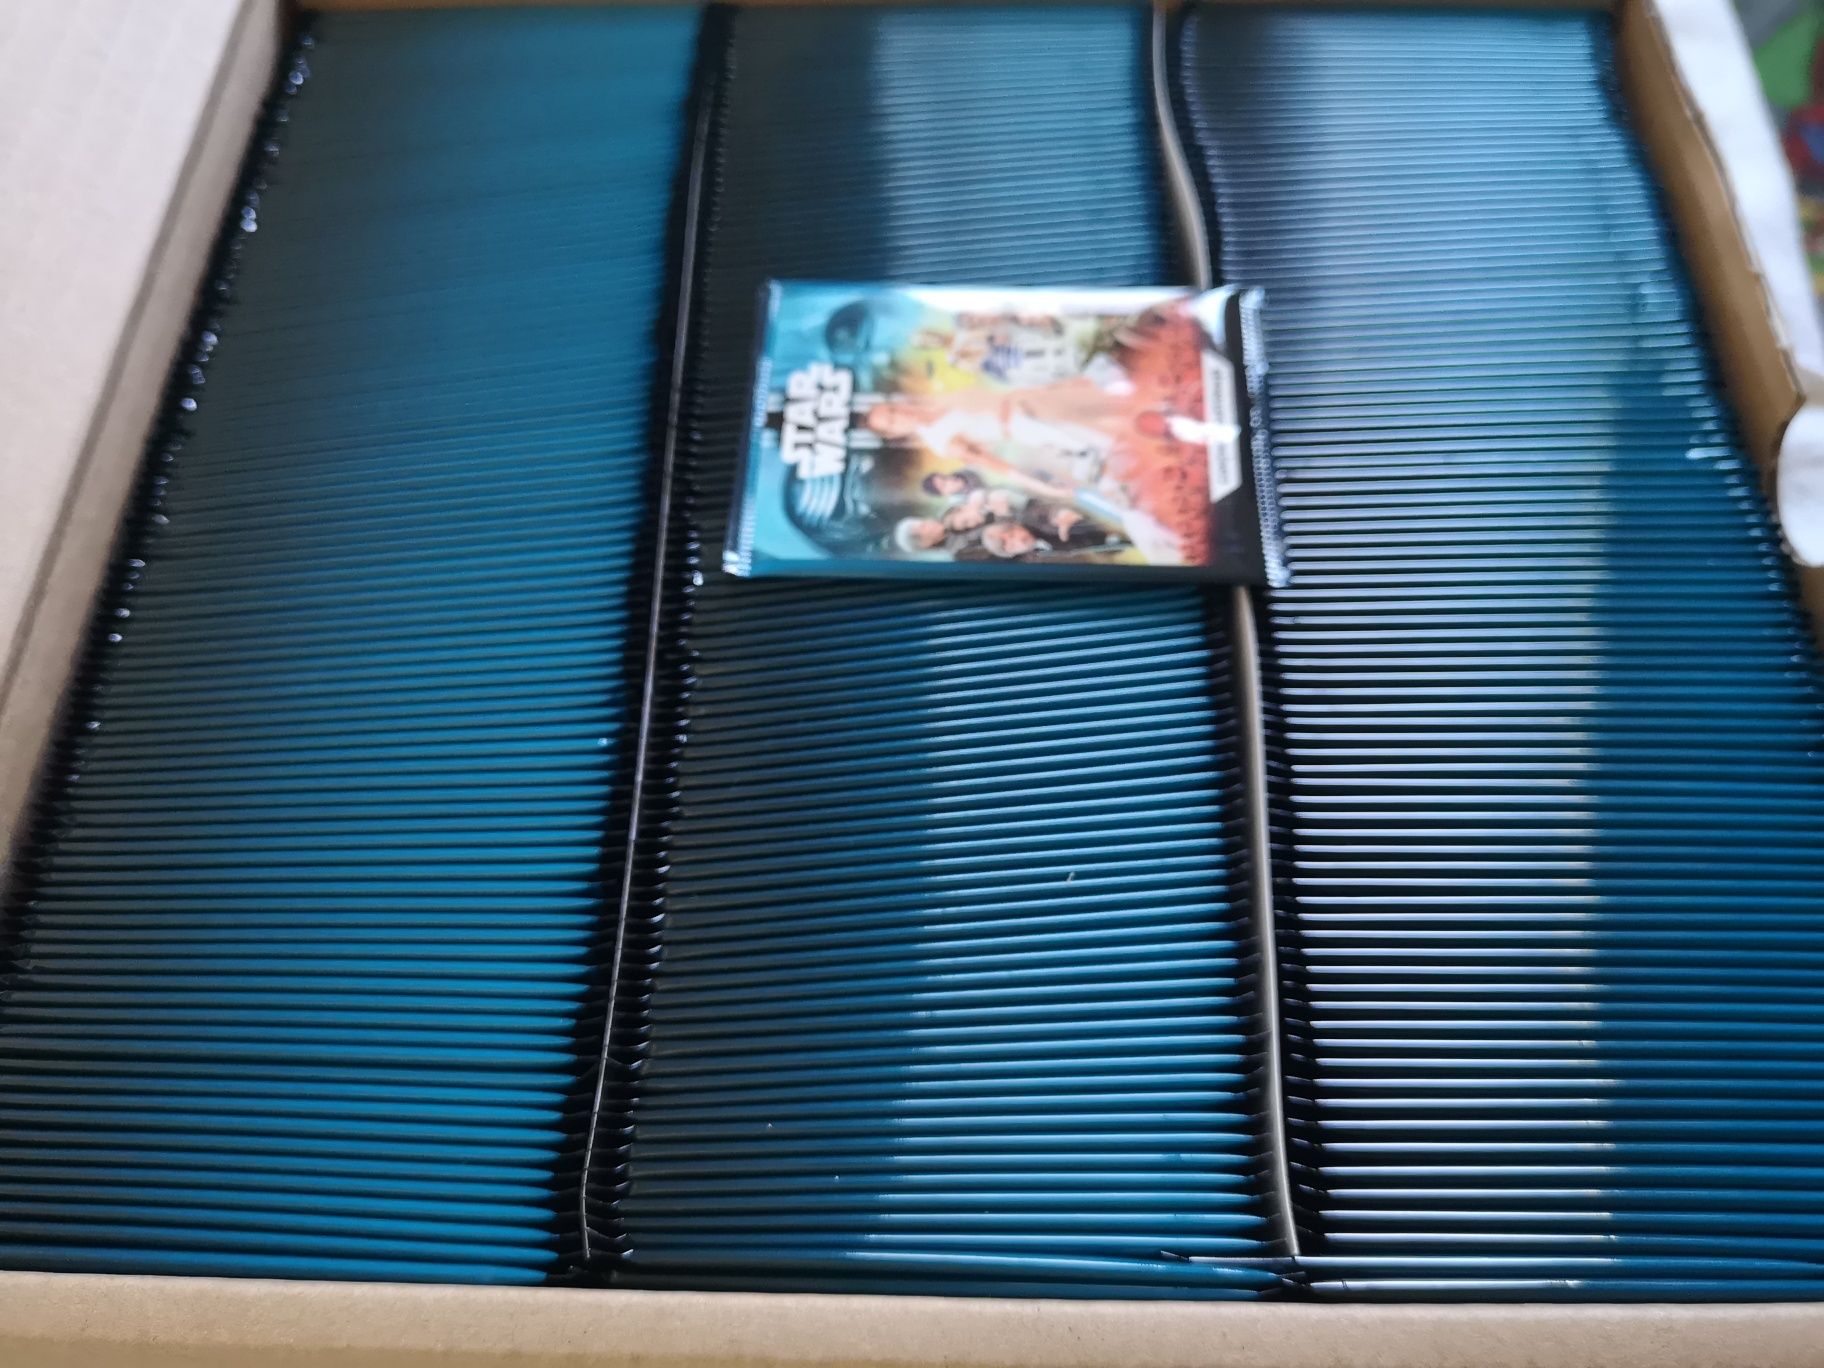 Star wars kaufland 300 pliculețe albastre sau 300 argintii cartonase